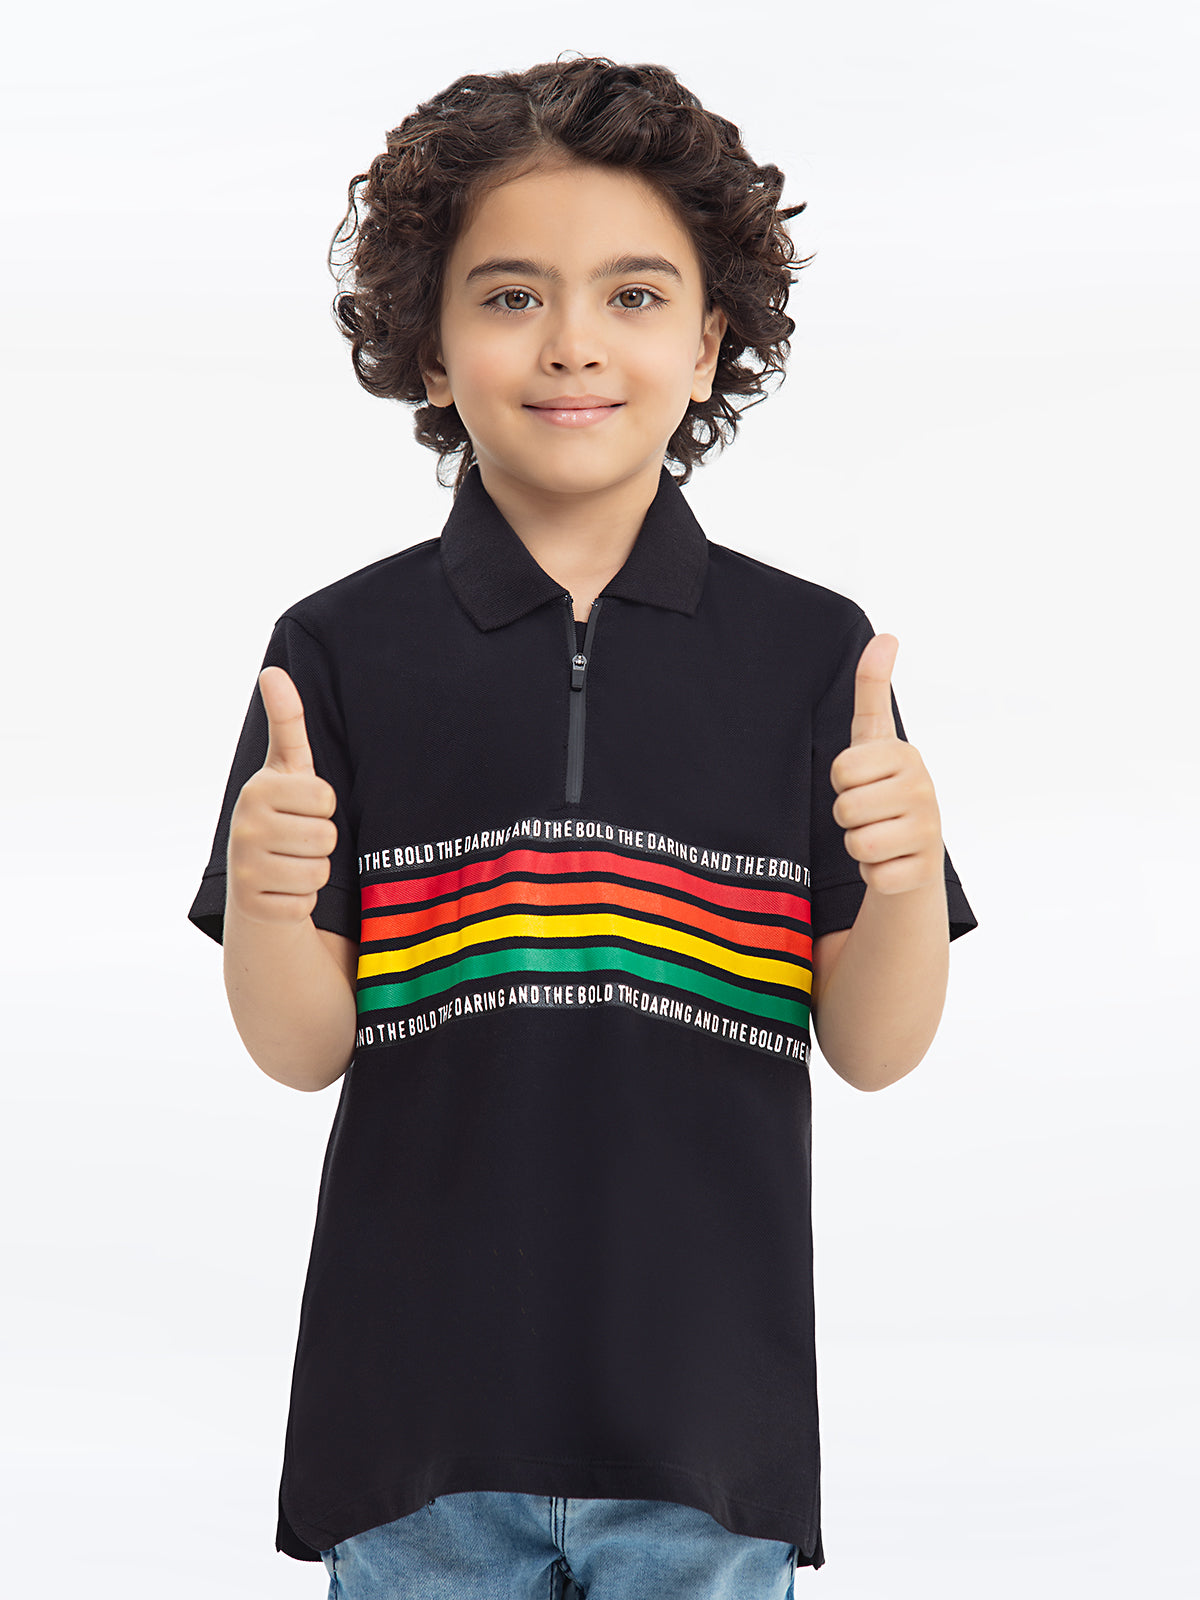 Boy's Black Polo Shirt - EBTPS24-008